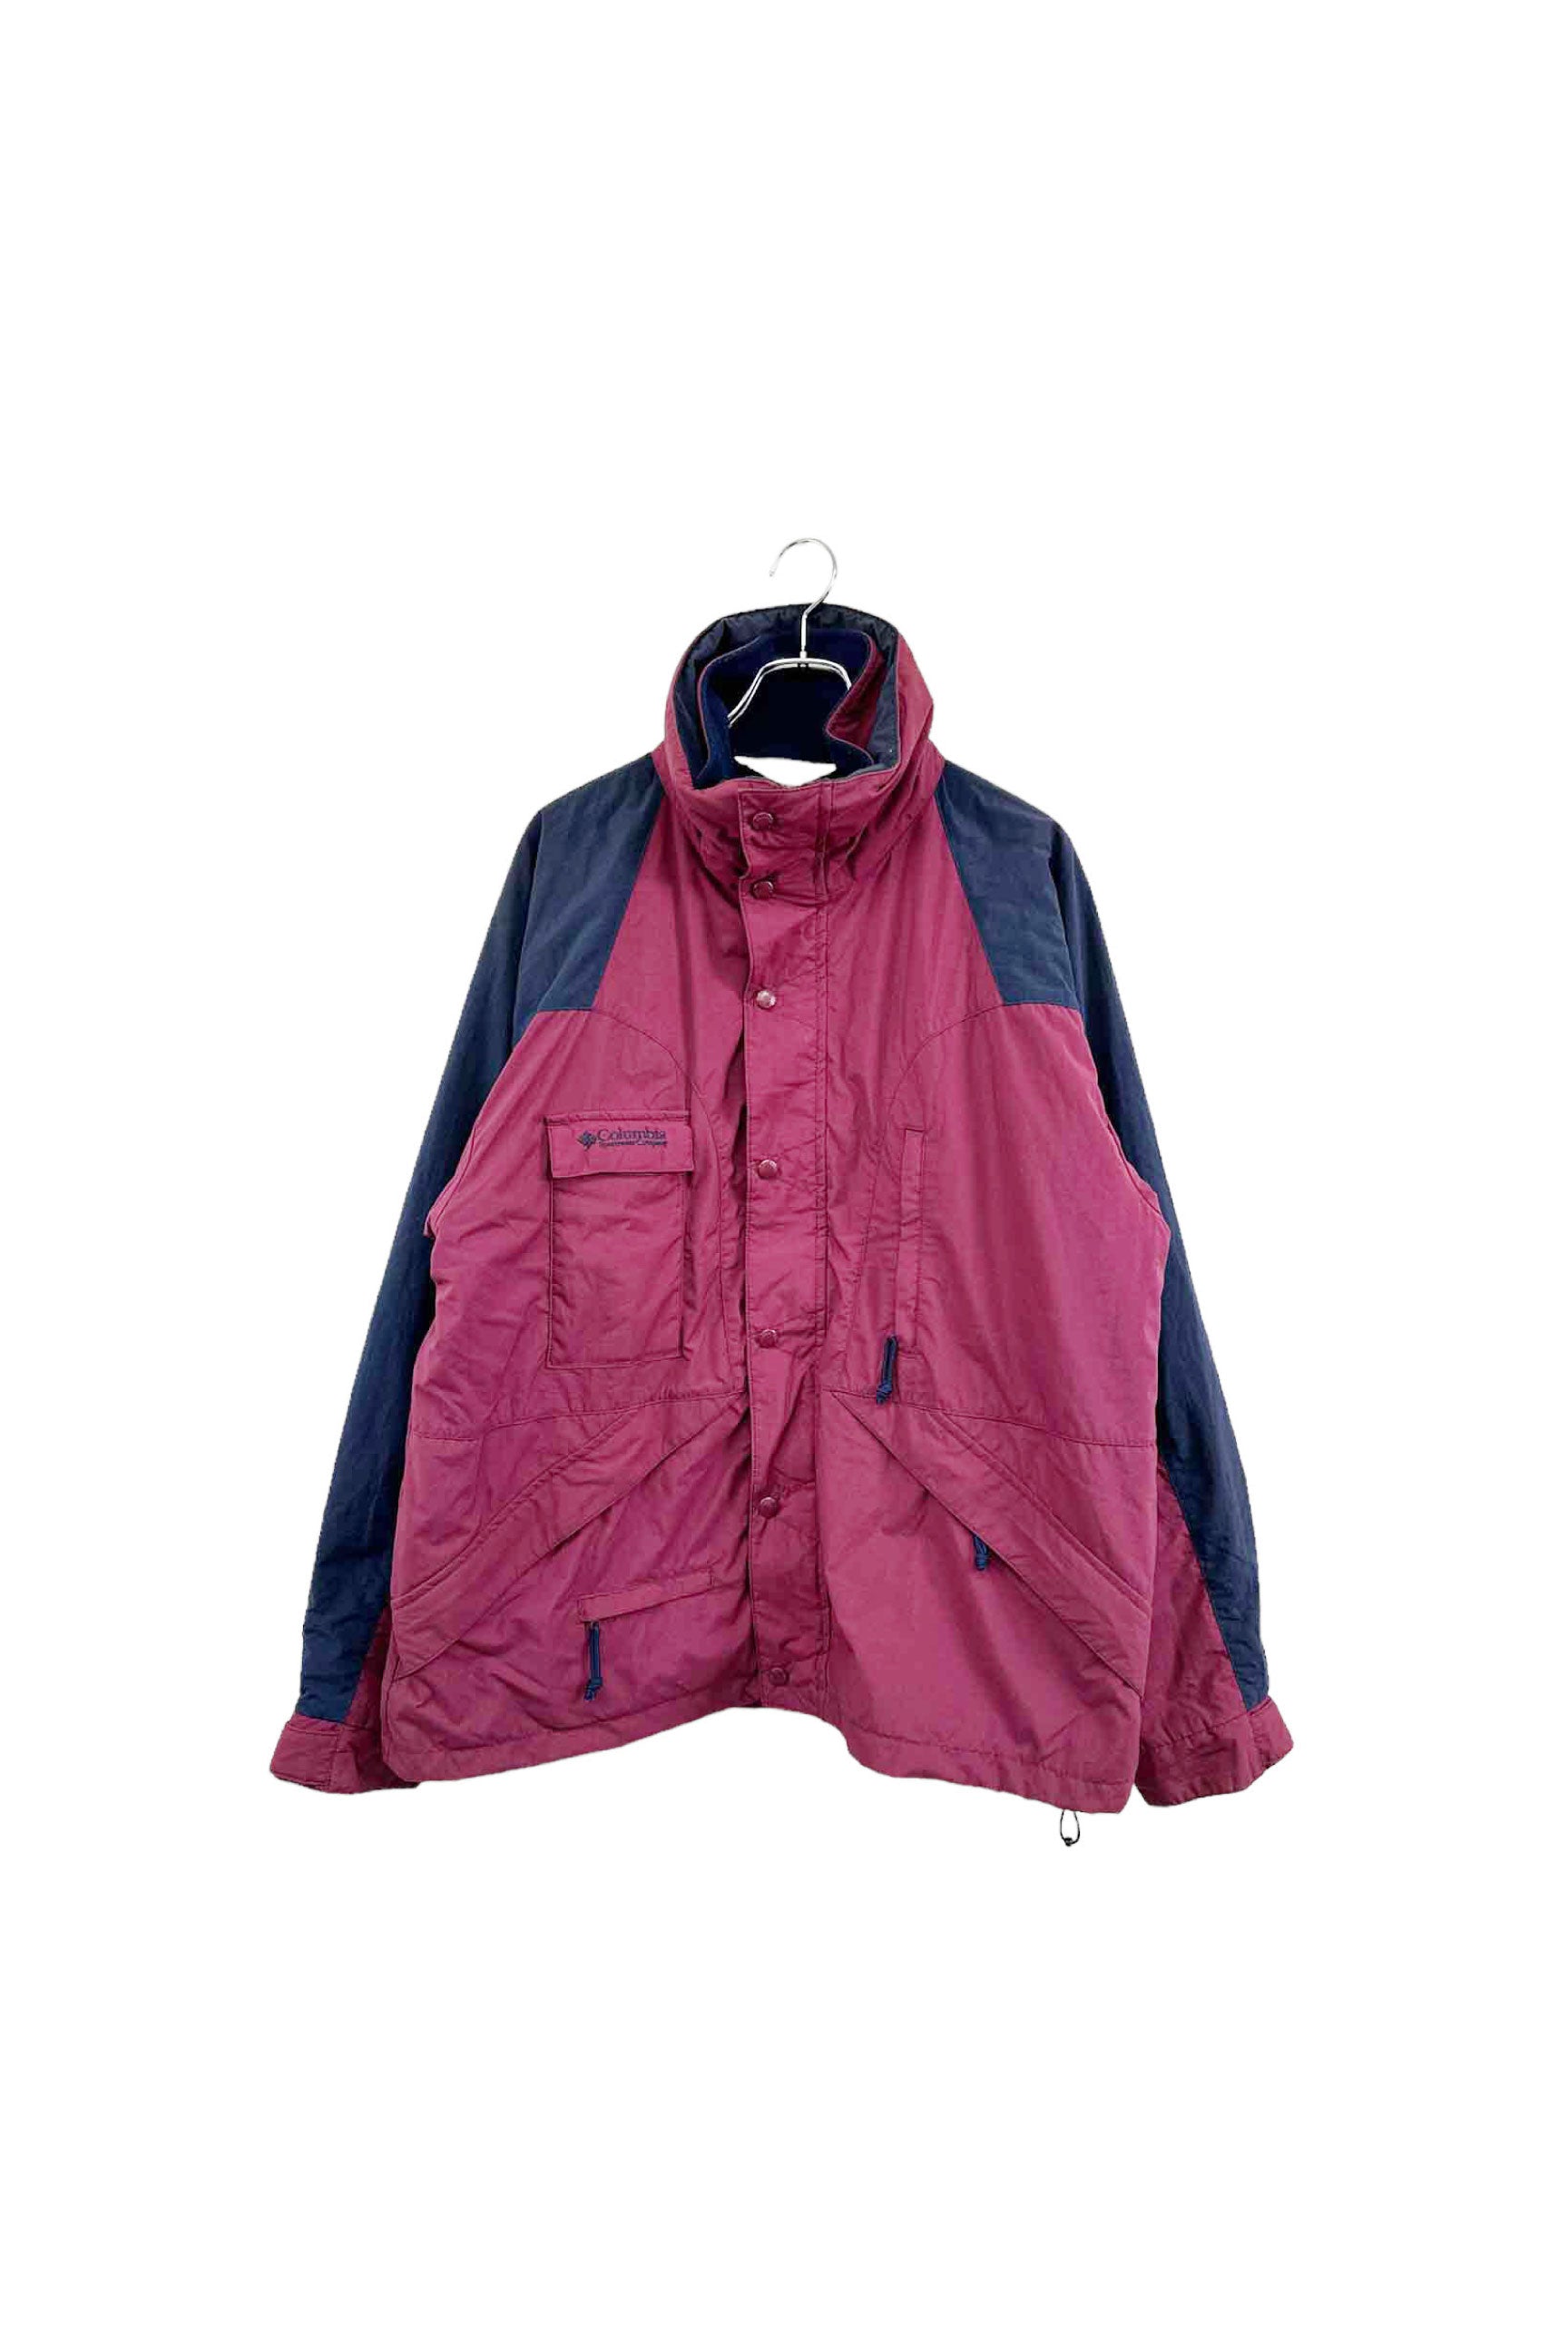 90s Columbia nylon jacket